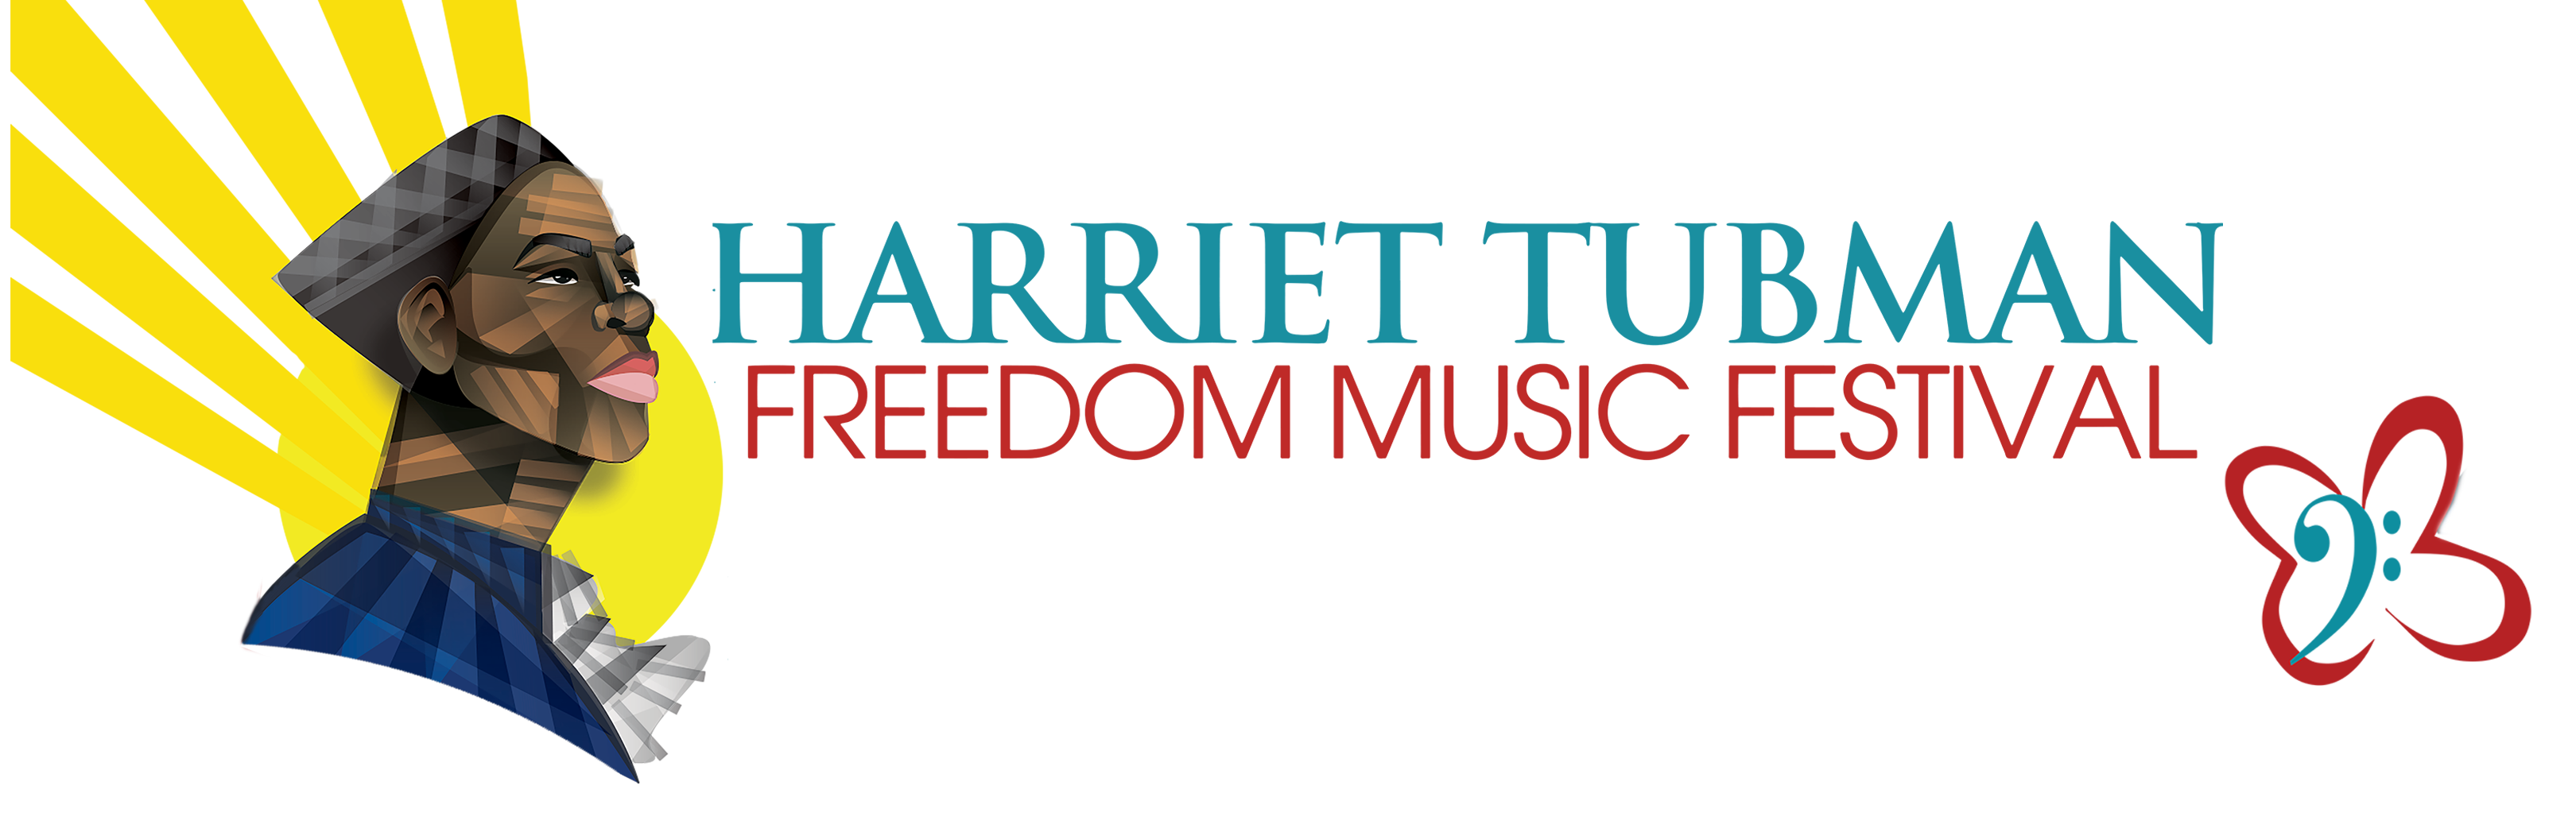 Harriet Tubman Freedom Music Festival